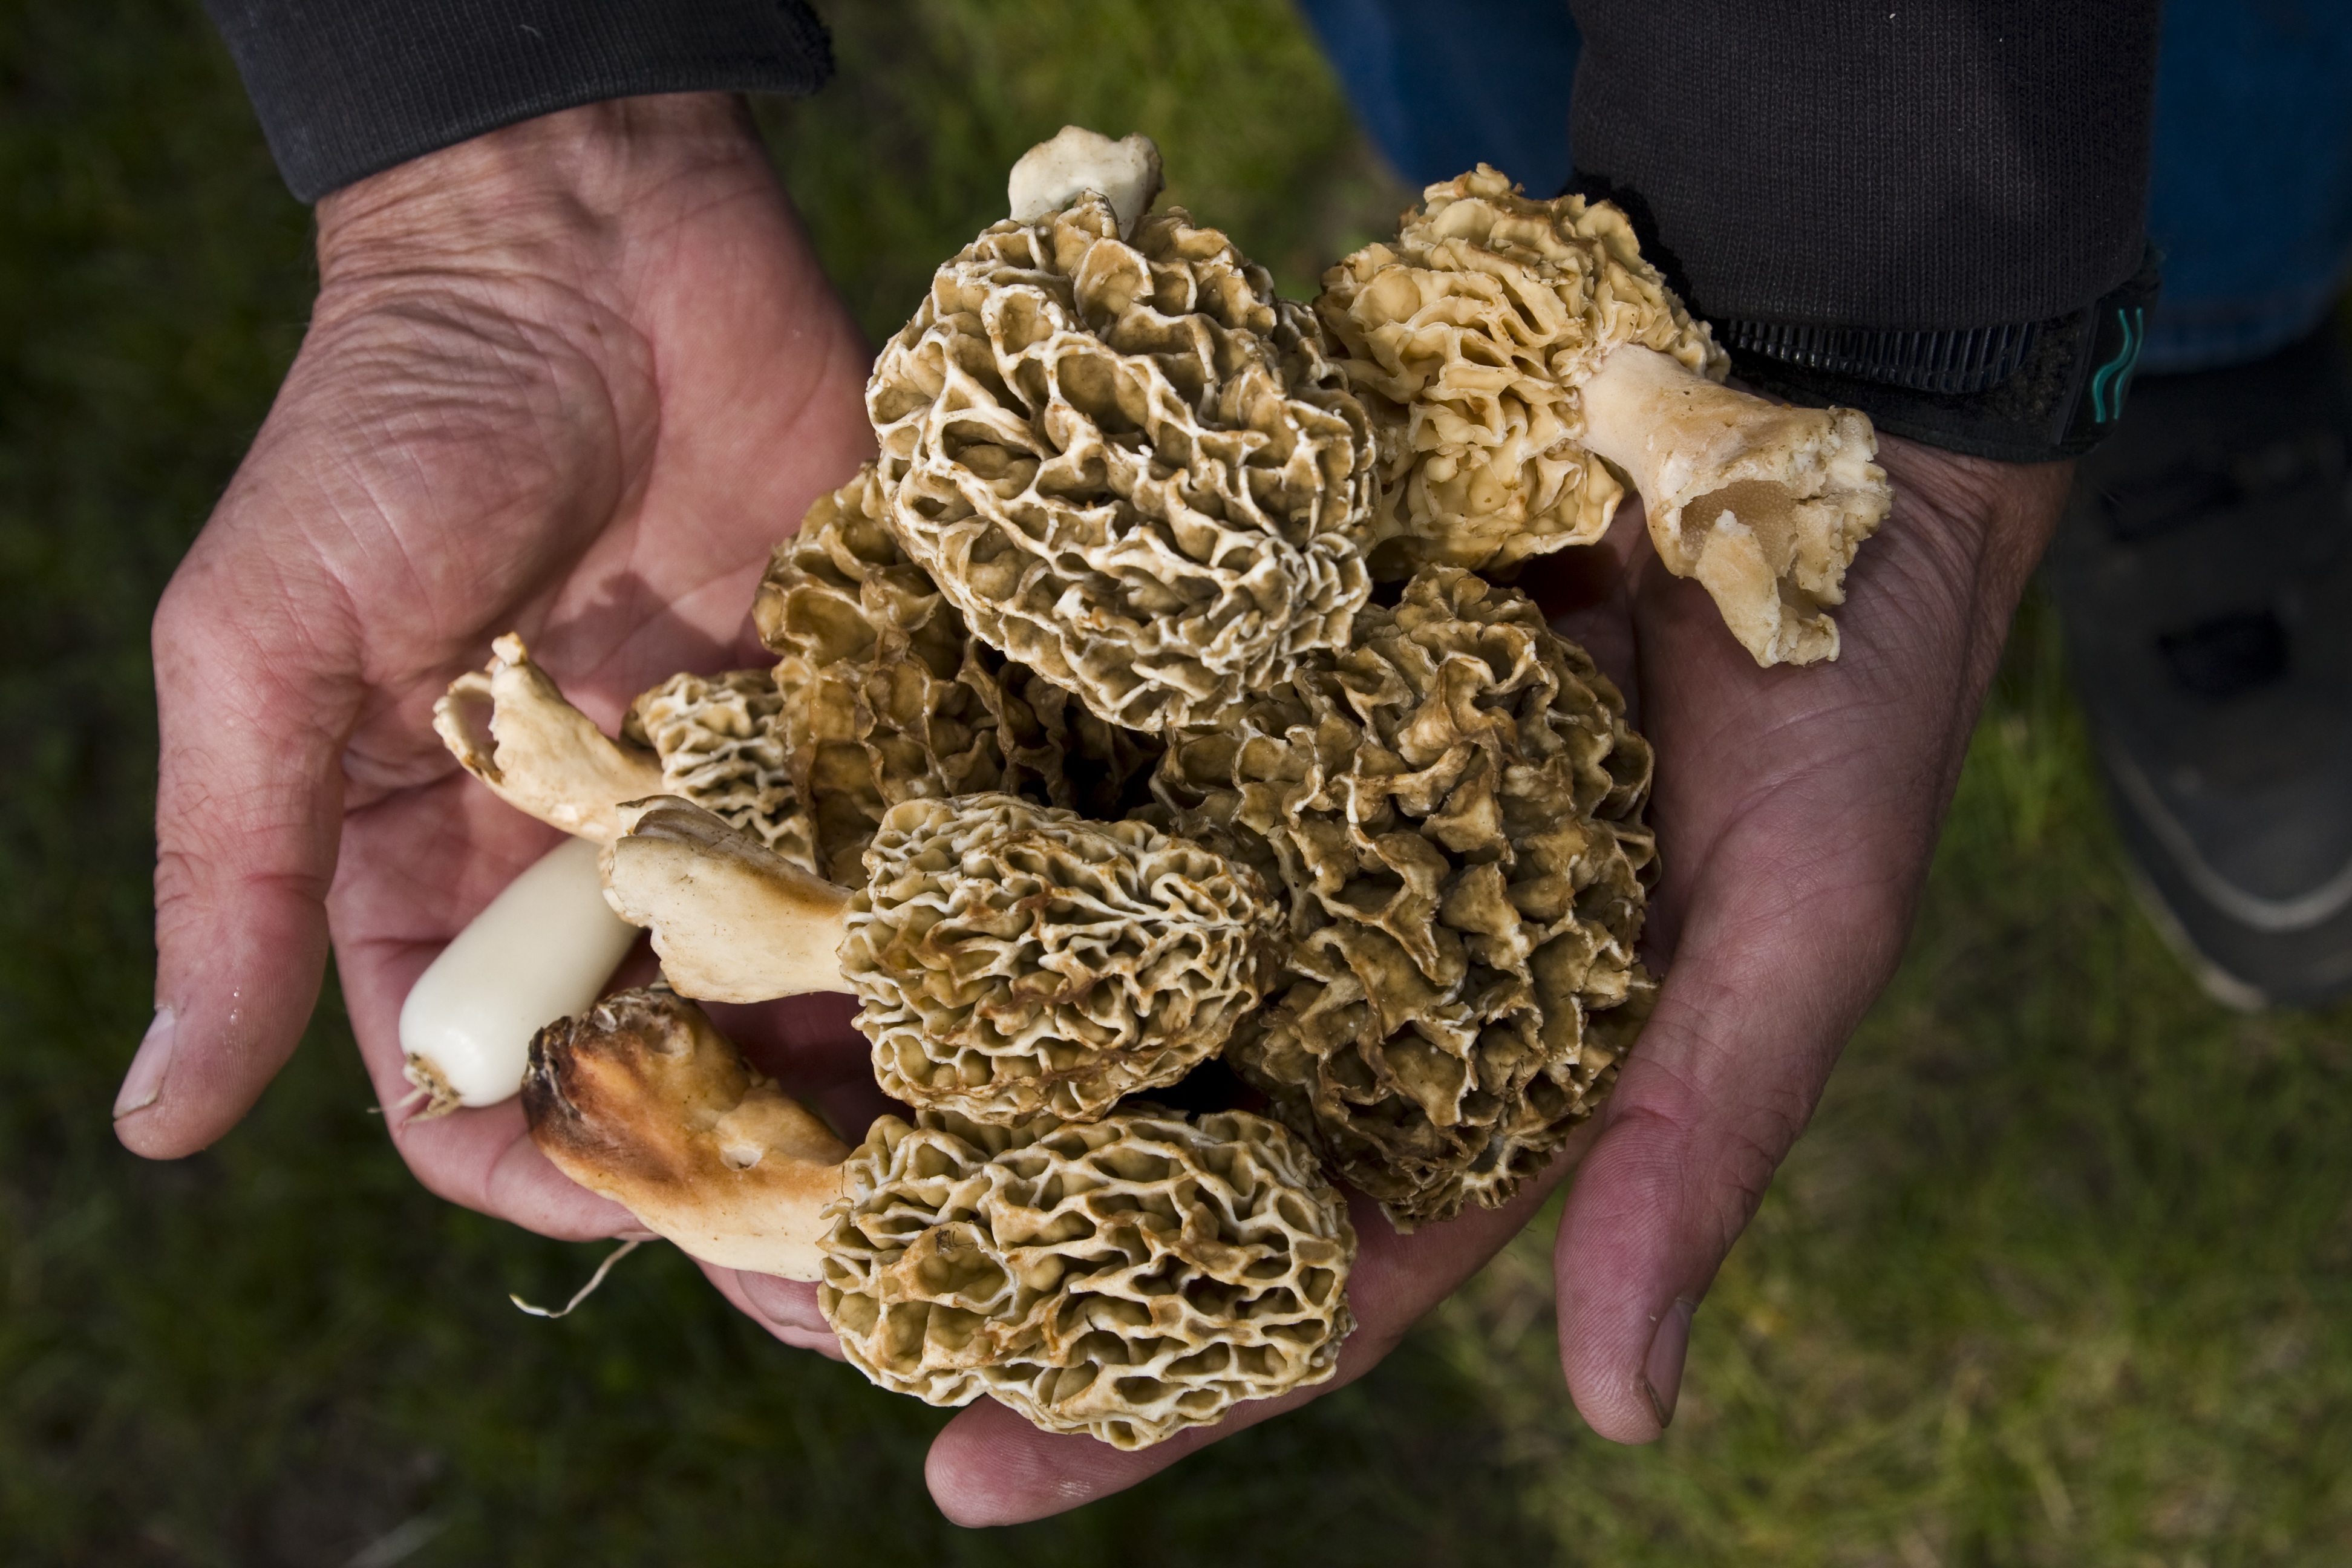 Annual Morel Mushroom Sightings Bring Avid Foragers and Nature